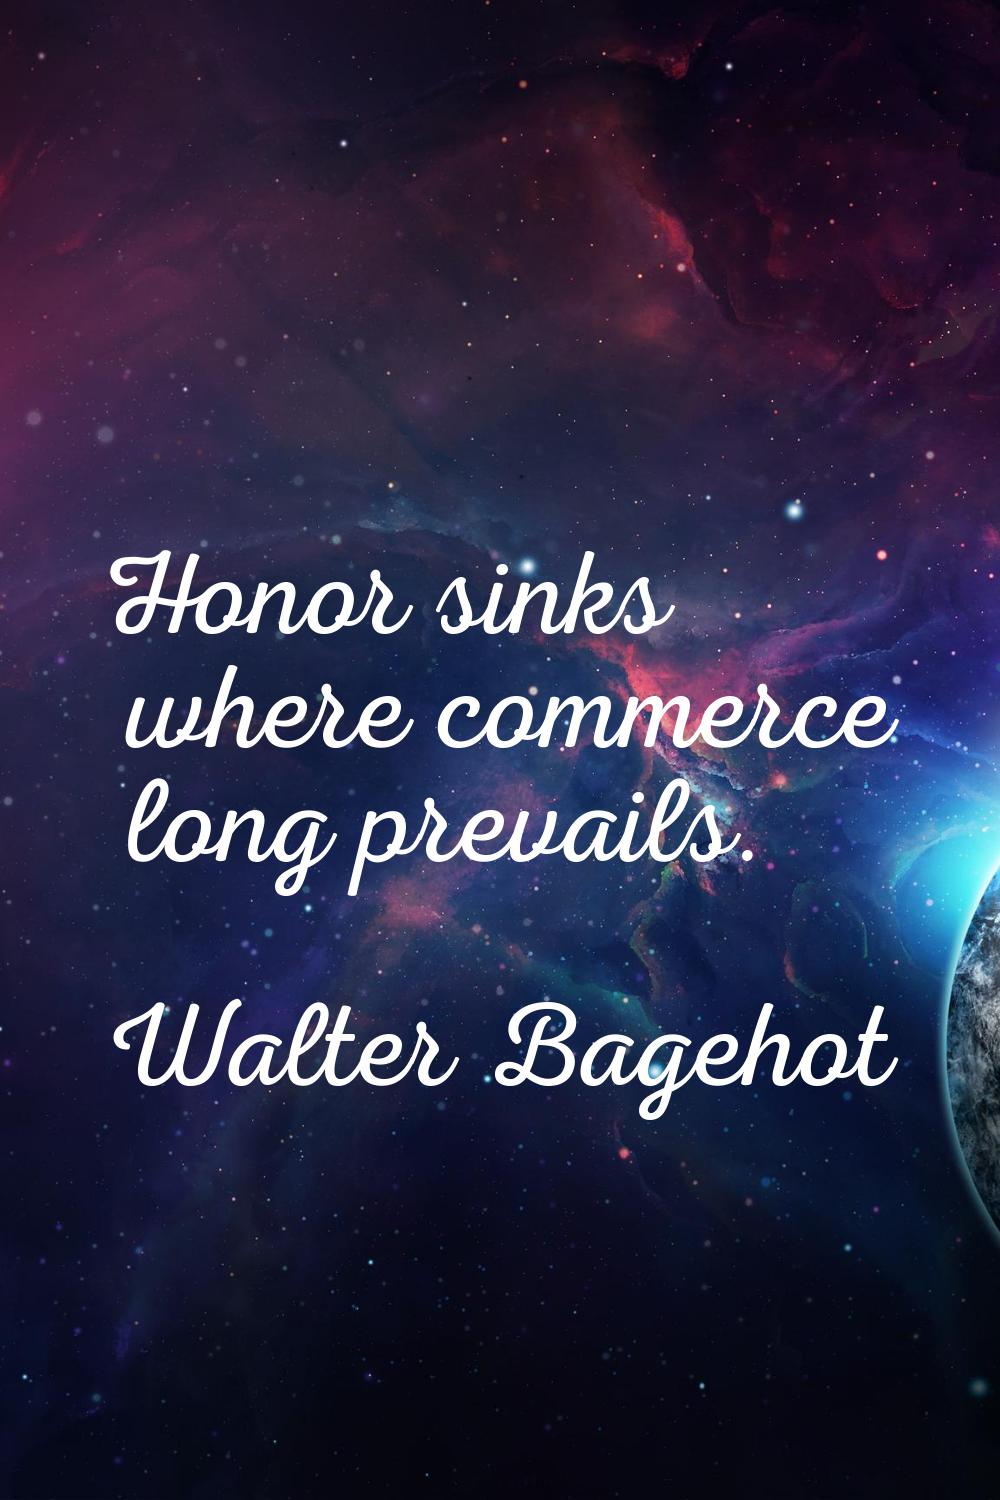 Honor sinks where commerce long prevails.